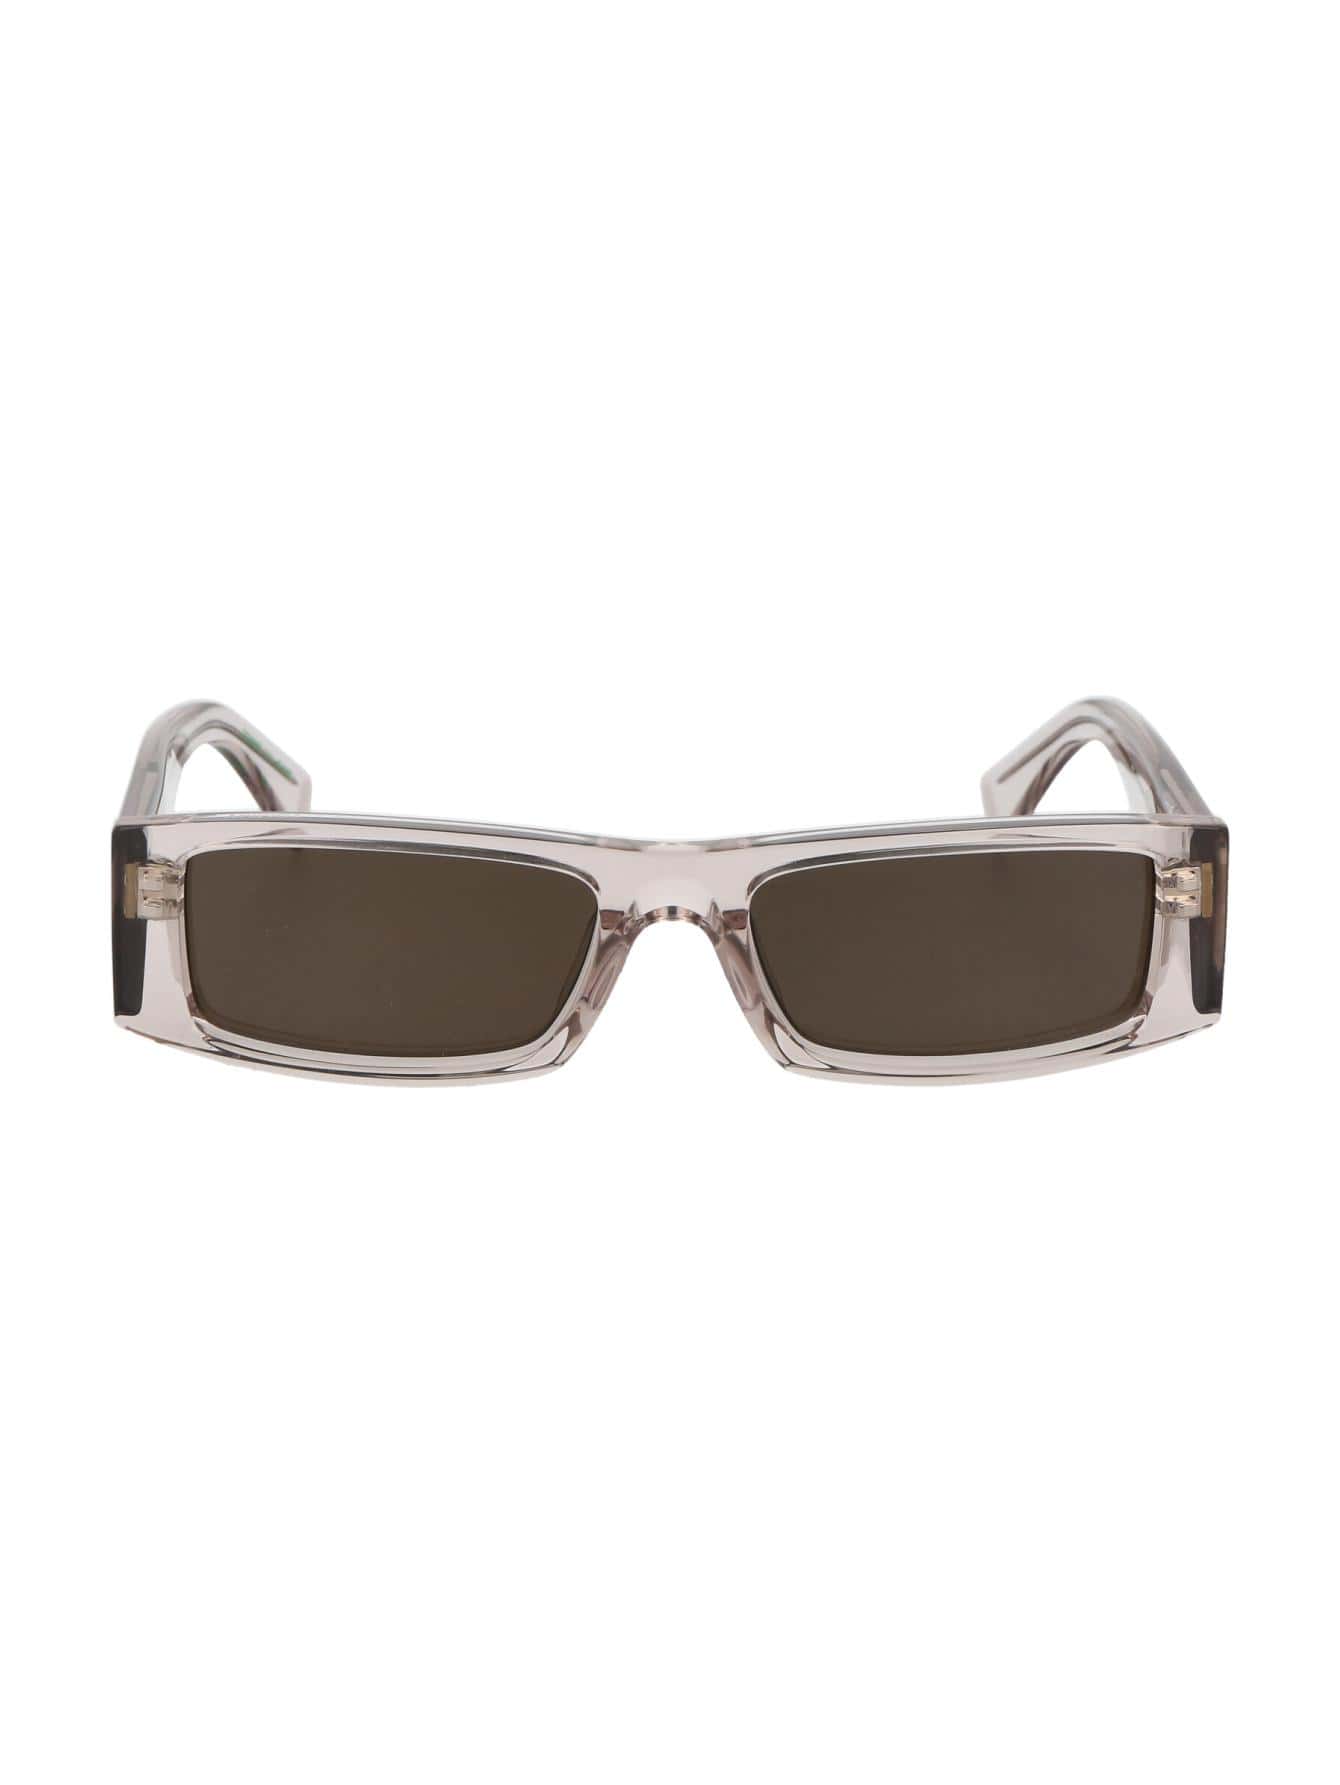 Мужские солнцезащитные очки Tommy Hilfiger DECOR TJ0092S10A70, многоцветный солнцезащитные очки tommy hilfiger мультиколор